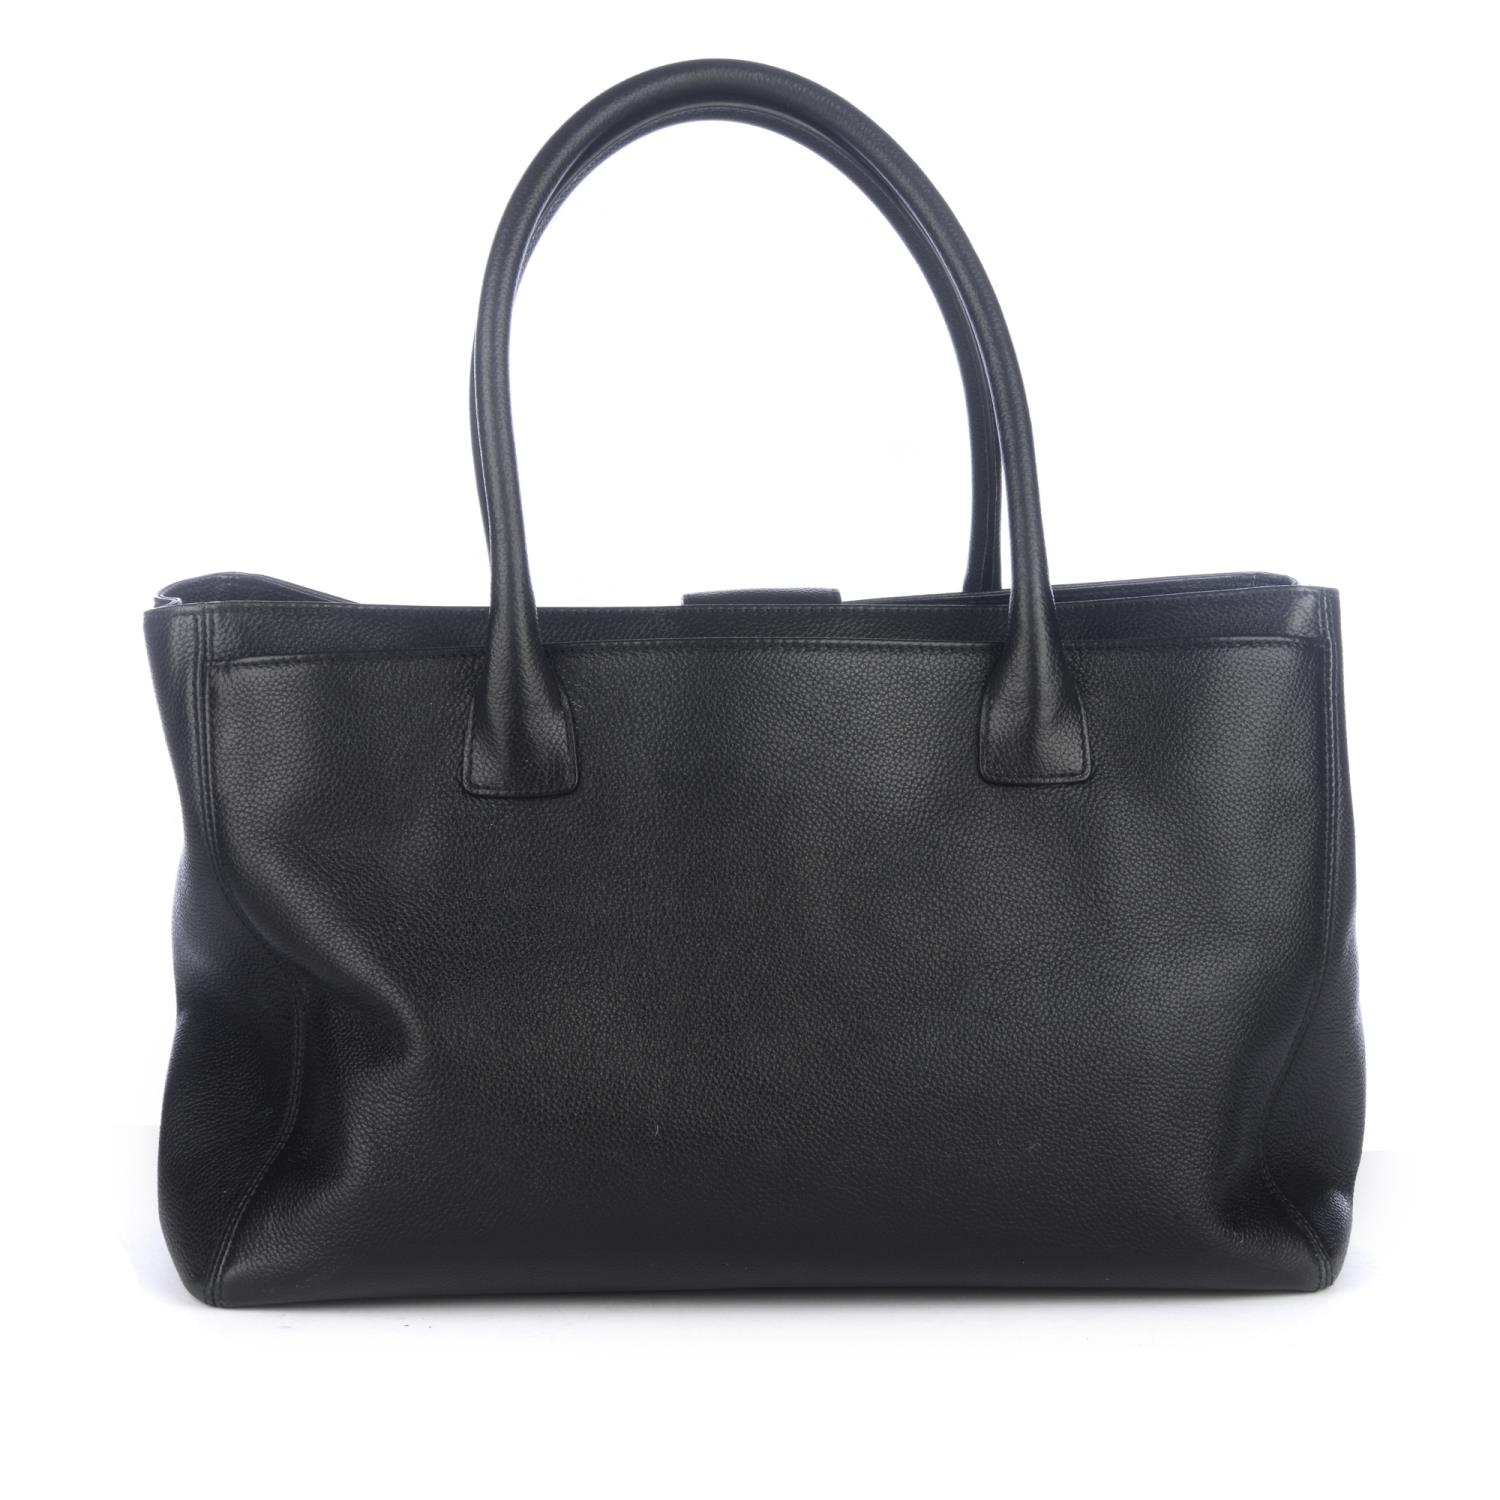 CHANEL - a Cerf Executive Tote handbag. - Image 3 of 5